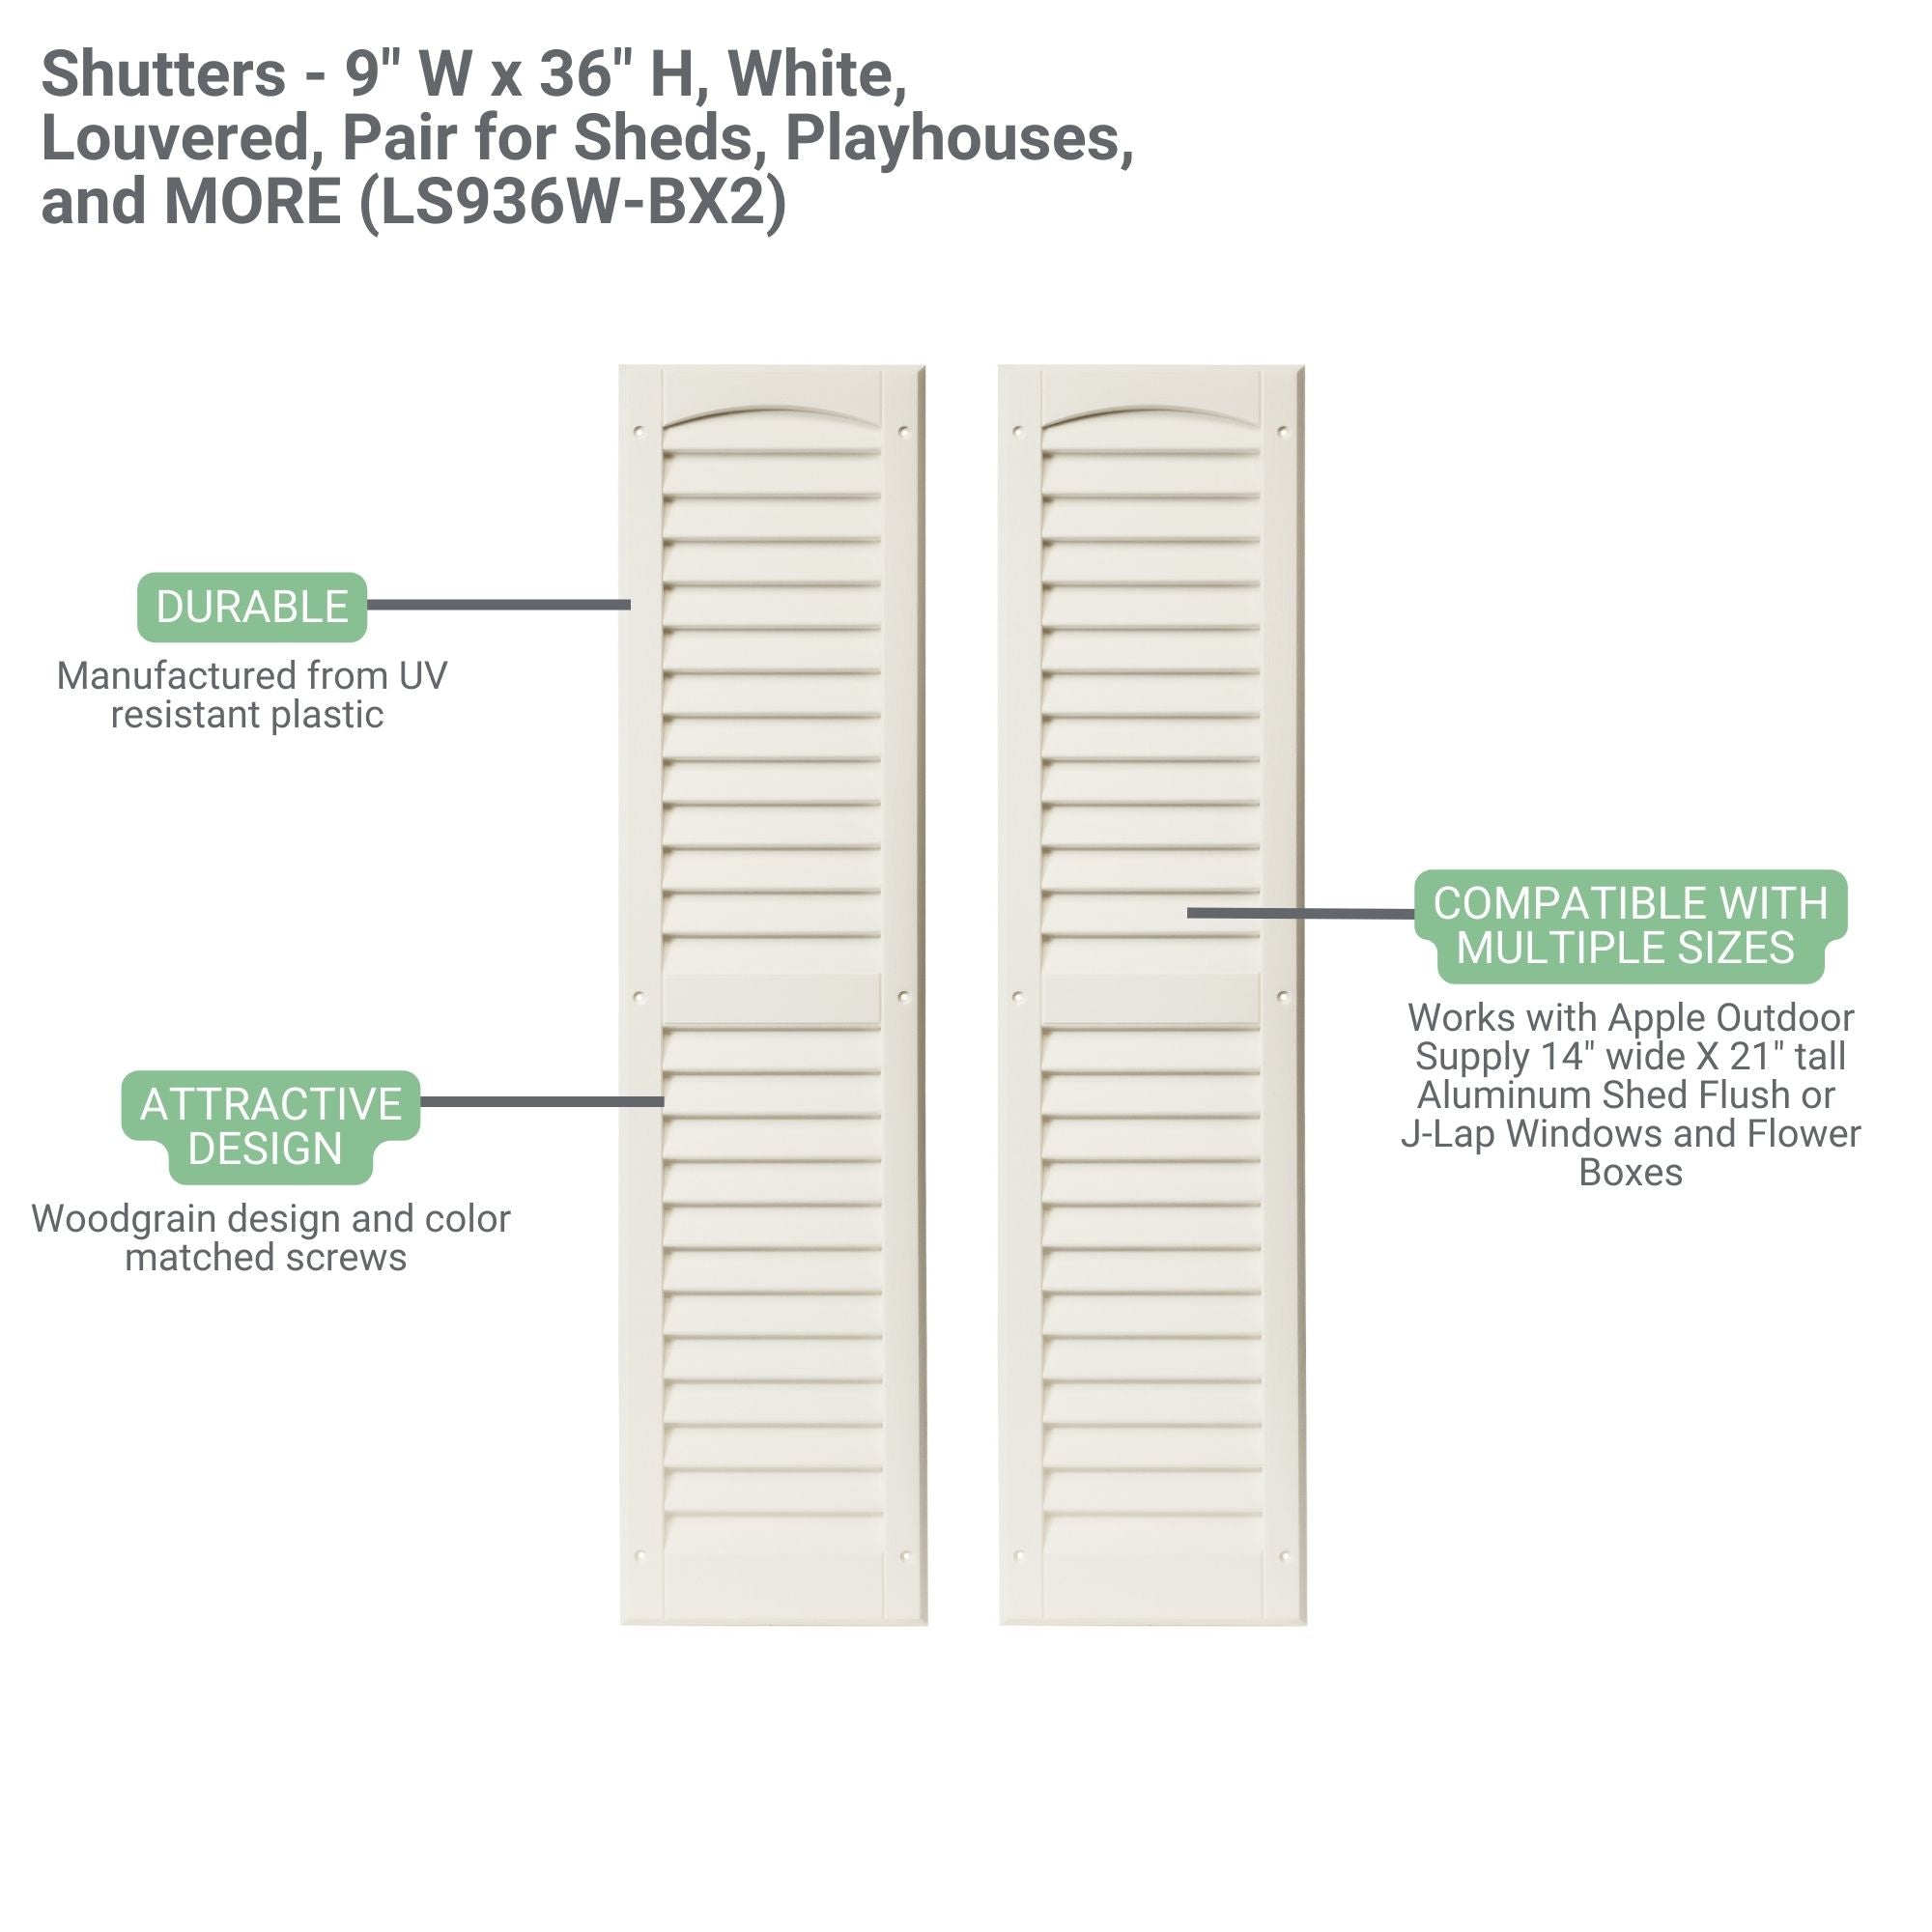 Shutters - 9" W x 36" H Raised Panel Shutters,  1 Pair